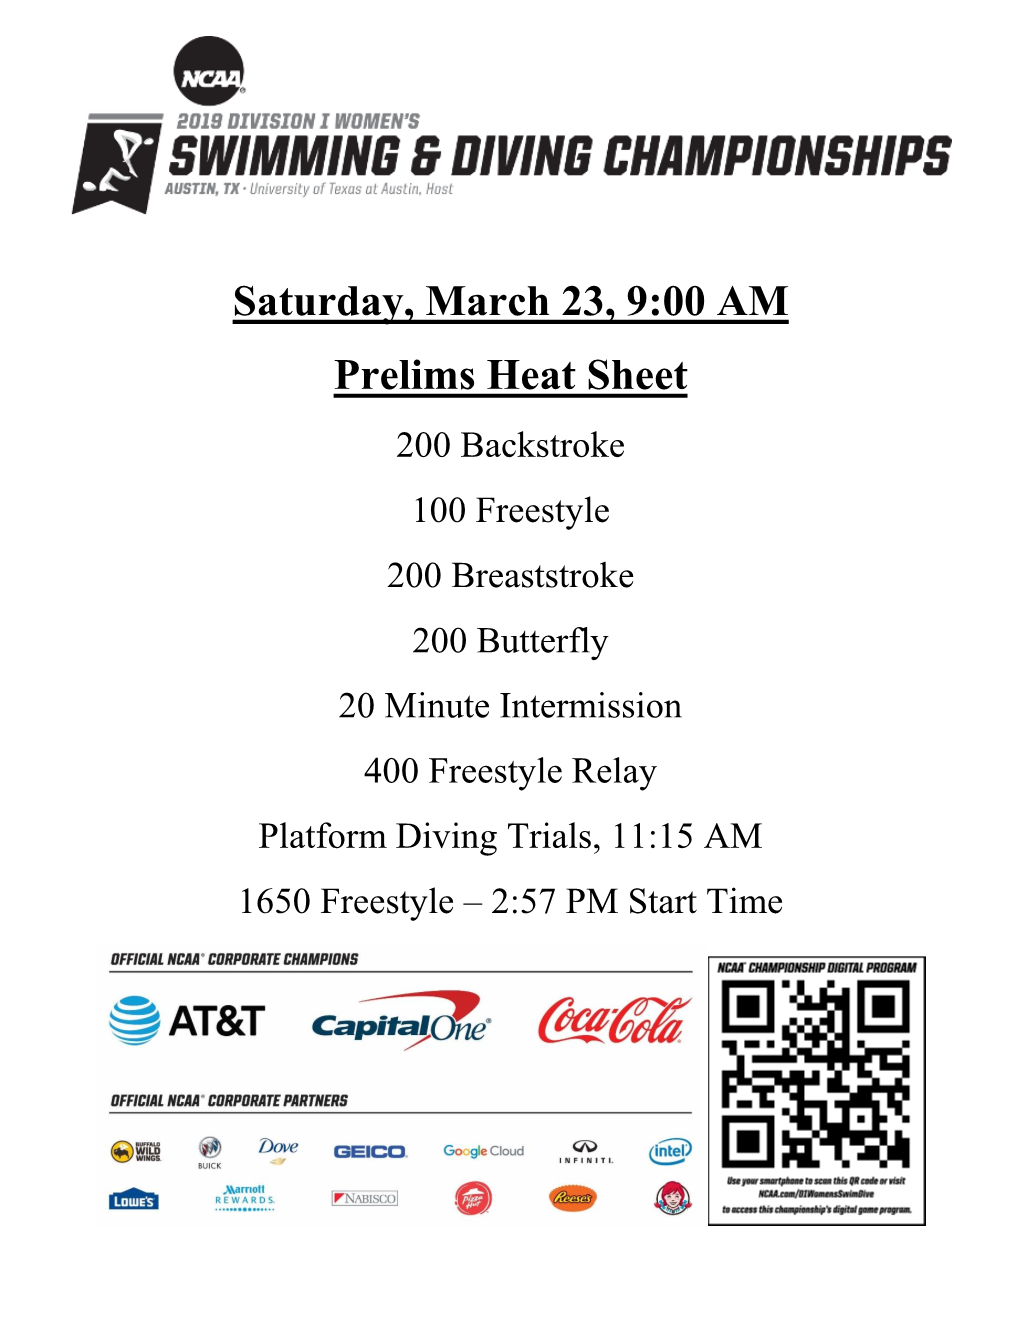 Saturday, March 23, 9:00 AM Prelims Heat Sheet